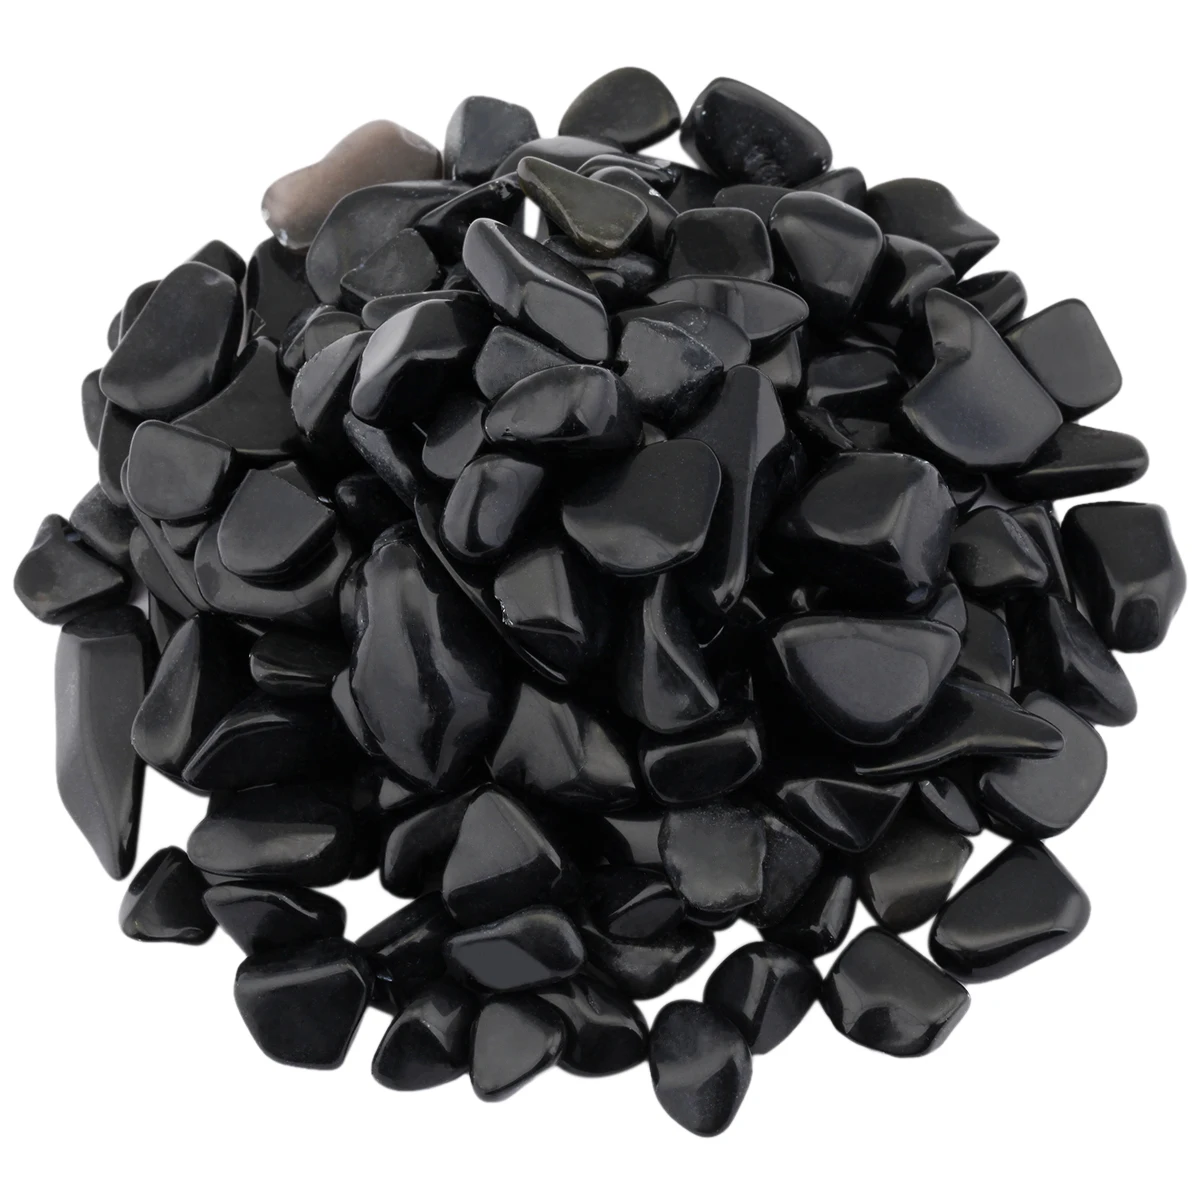 1 Pound(460g) Reiki Healing Tumbled Chip Stones Crushed Black Obsidian Irregular Shape Mineral Specimen For Home Decoration